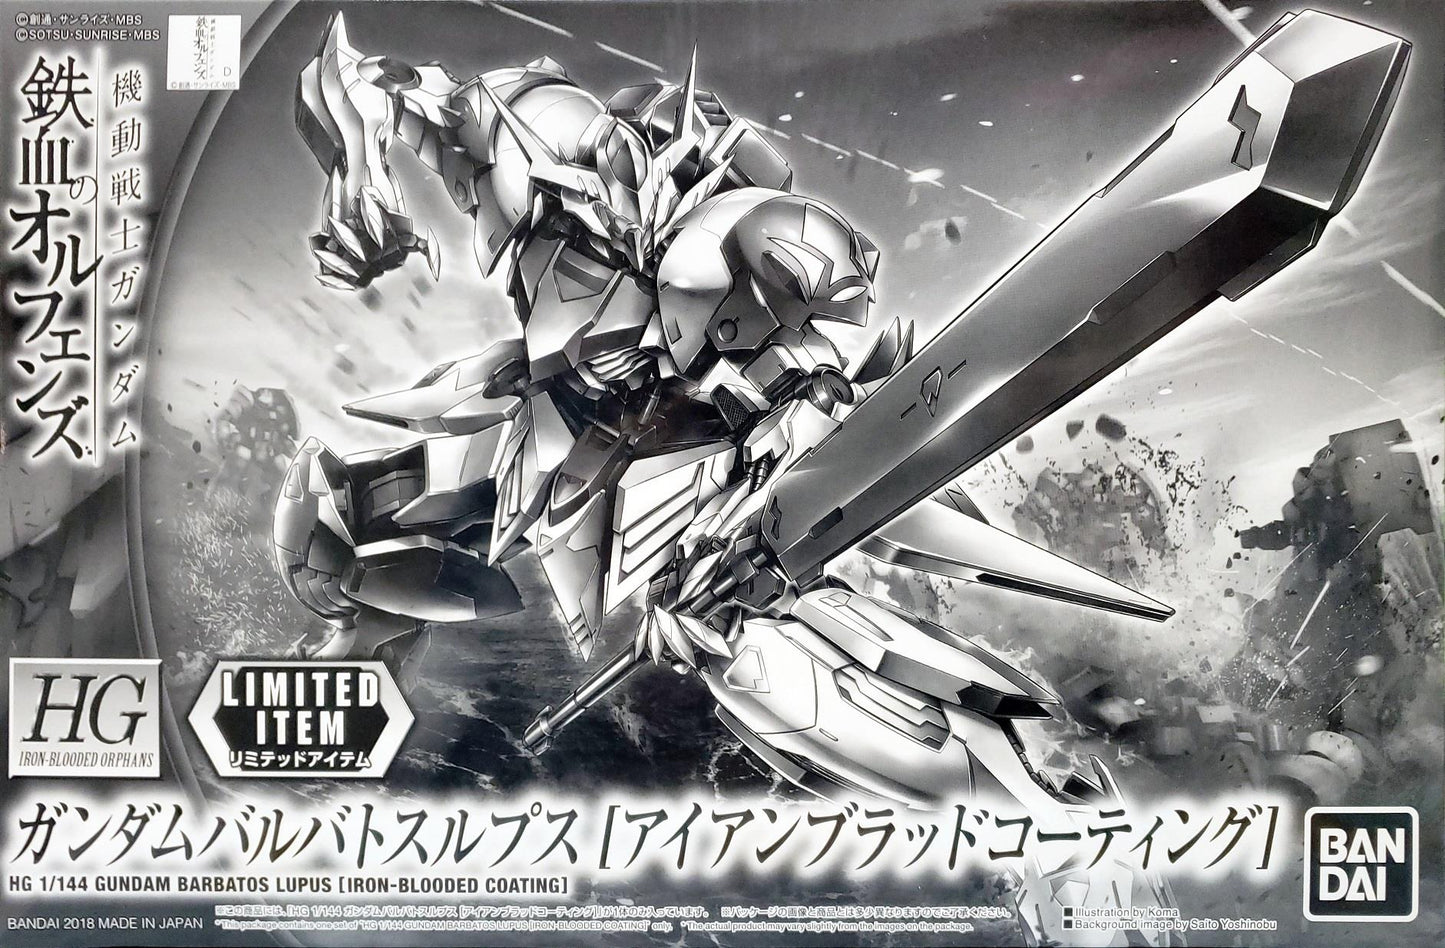 Gundam: Gundam Barbatos Lupus (Iron-Blooded Coating) HG Model